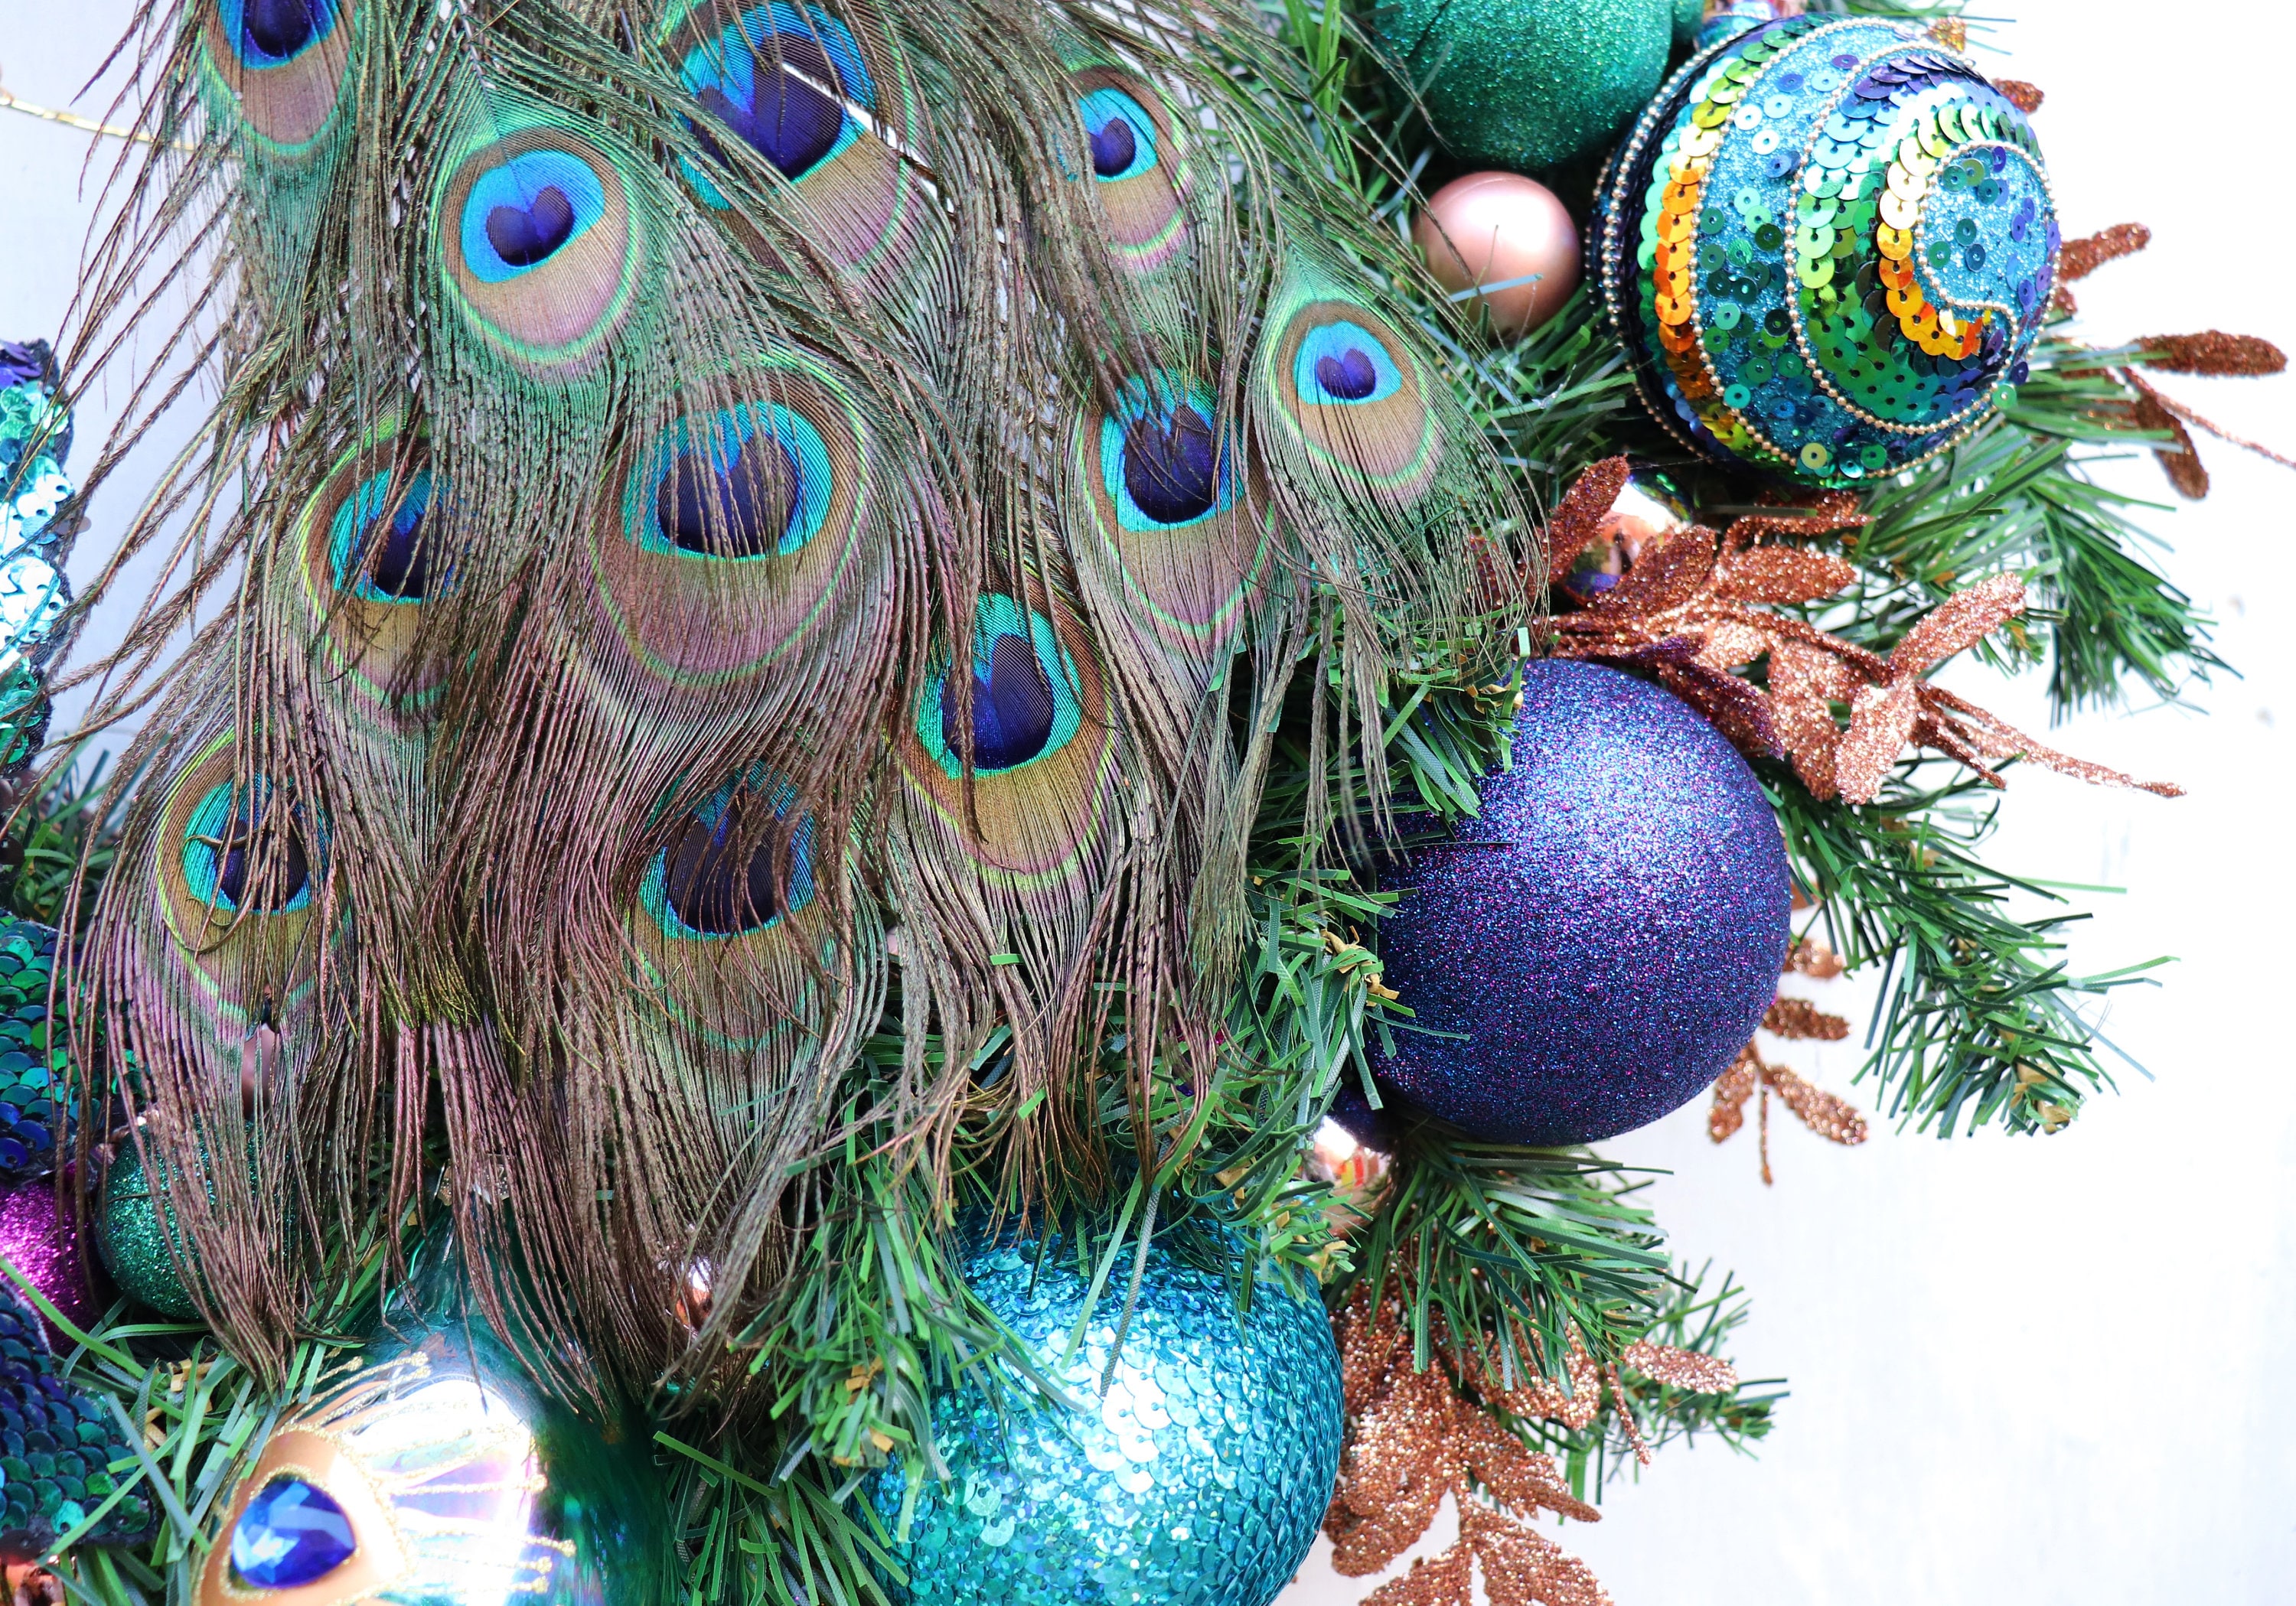 Peacock Christmas Ornament | Sugar Creek Home Decor